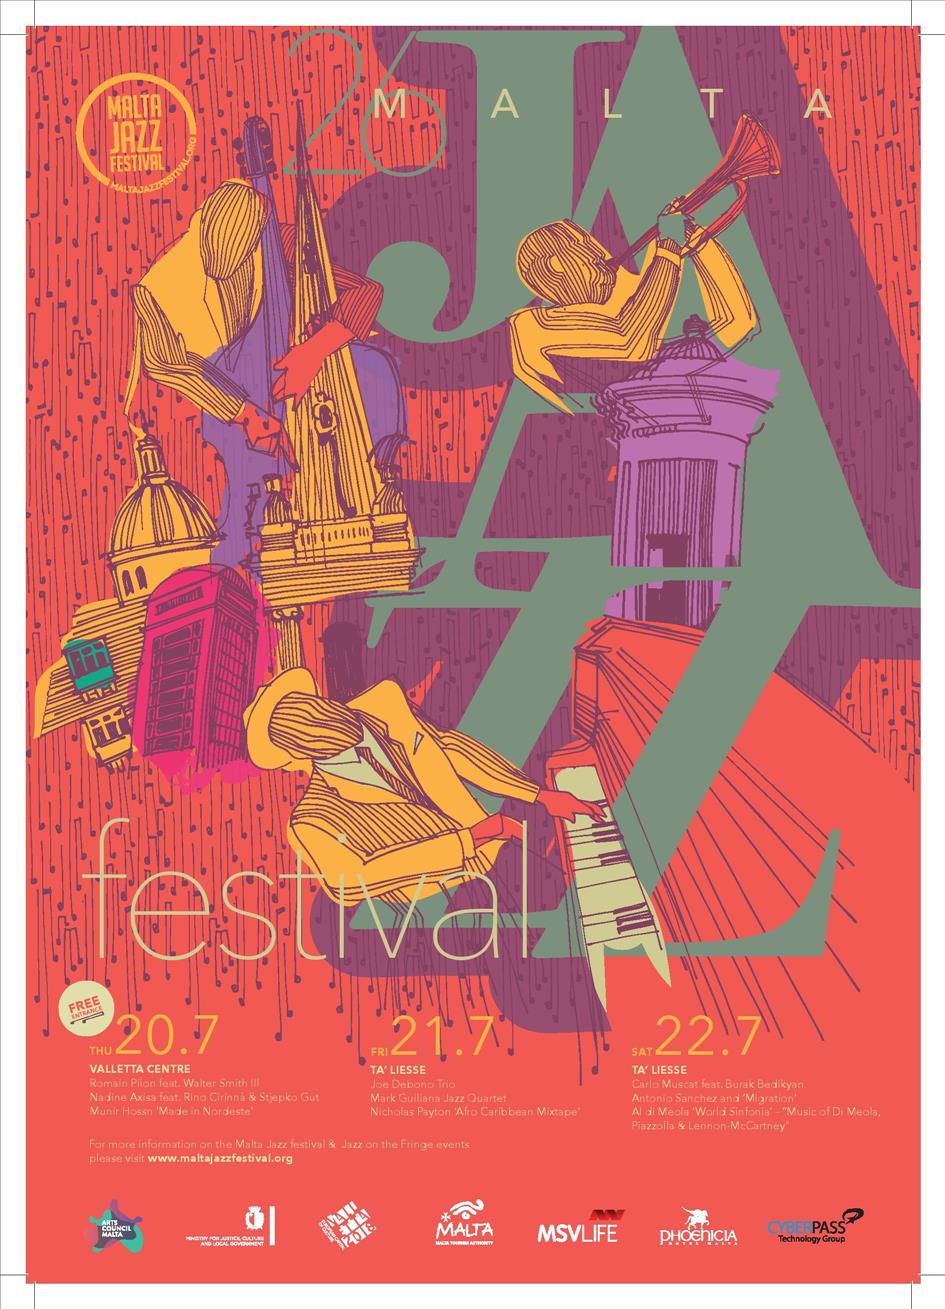 Malta Jazz Festival 2017 poster